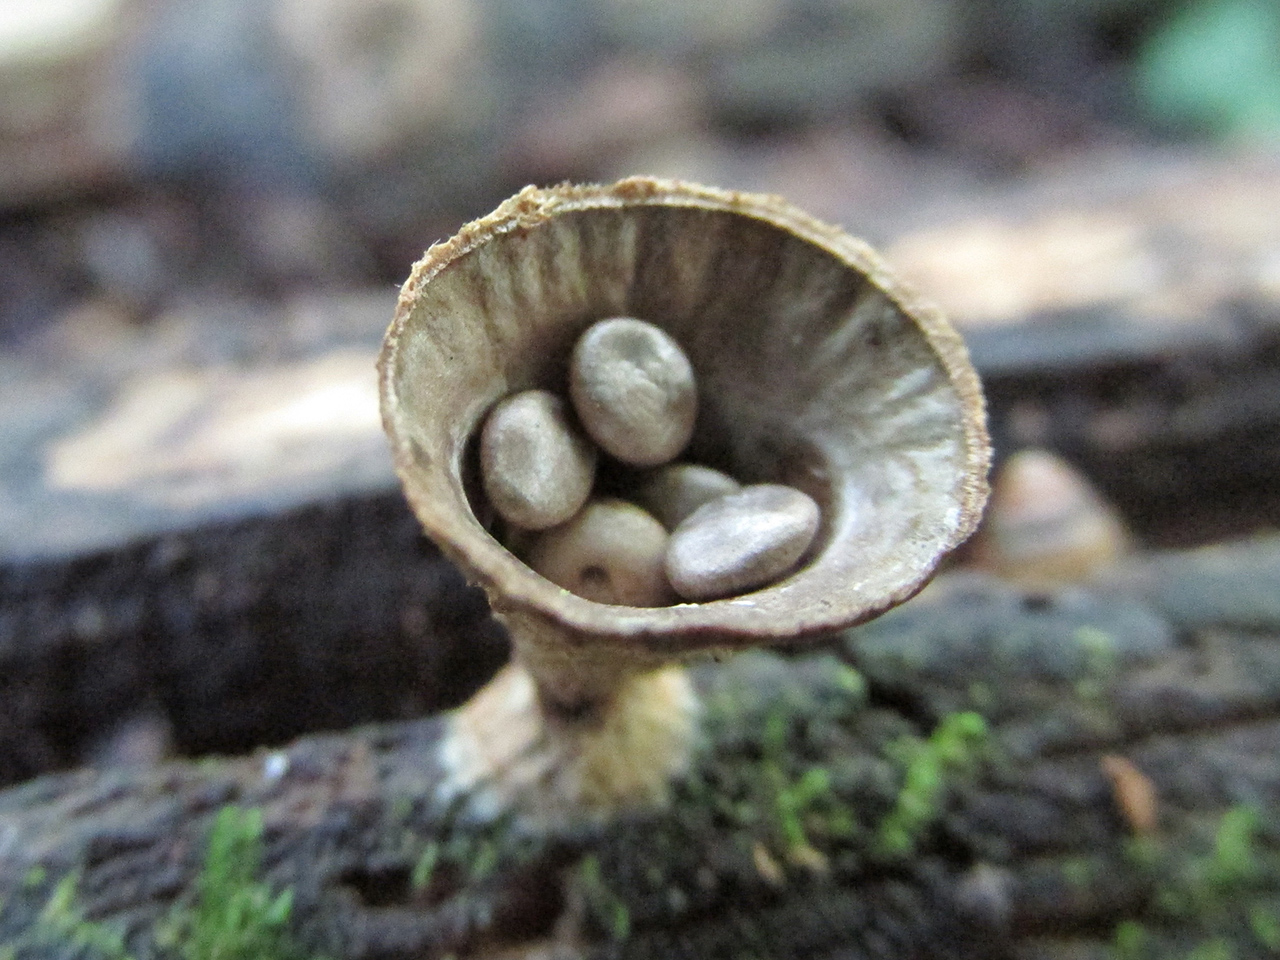 Birds Nest Fungi